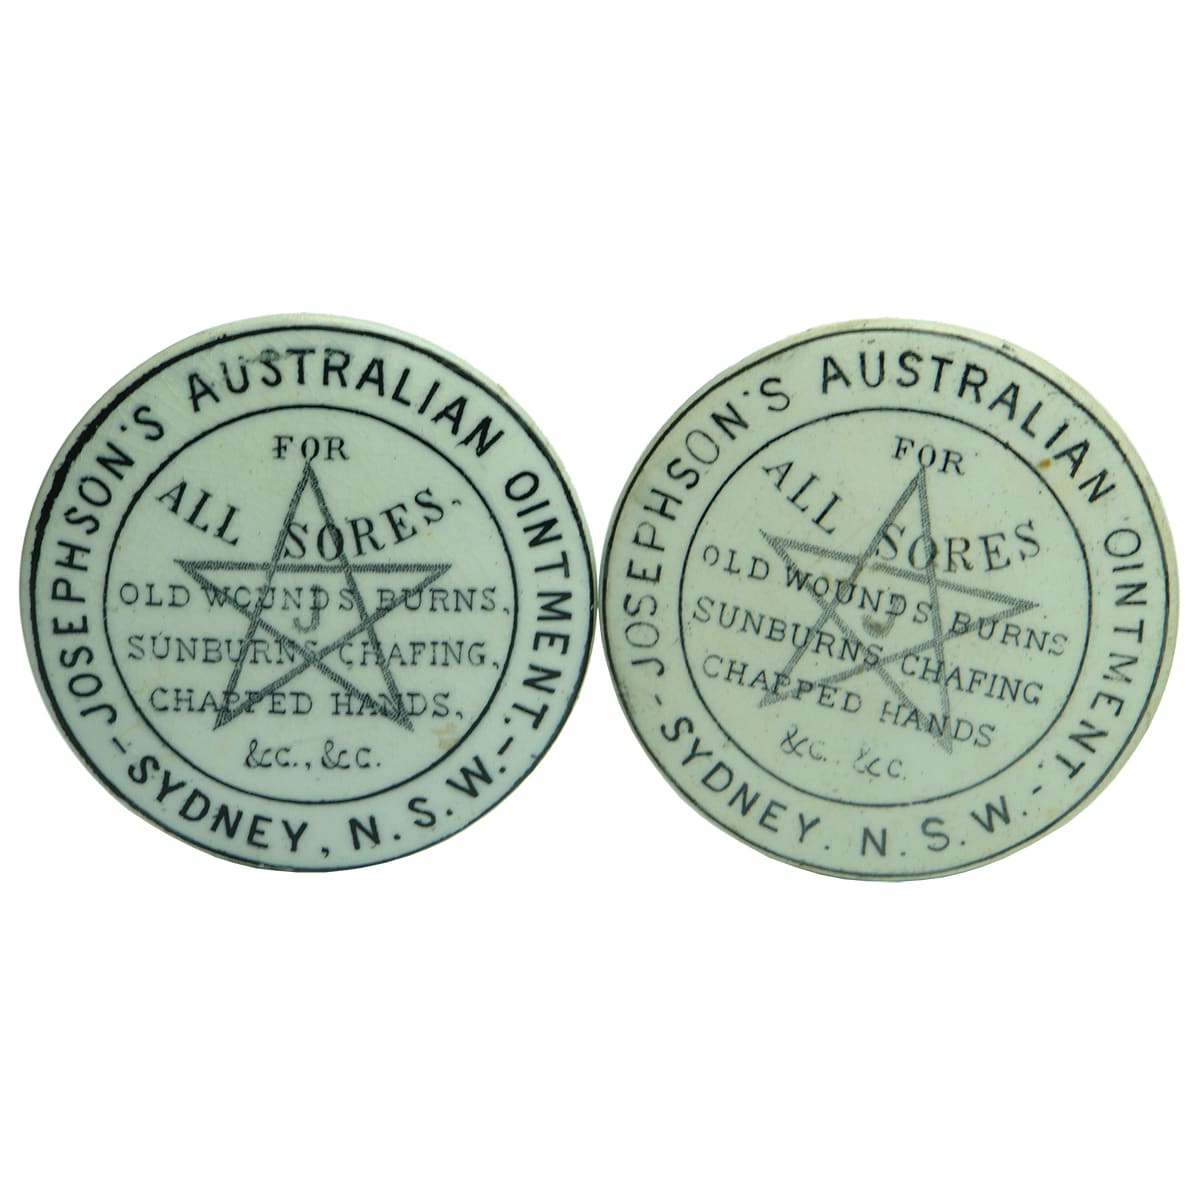 Pair of small Josephson's Australian Ointment Lids.